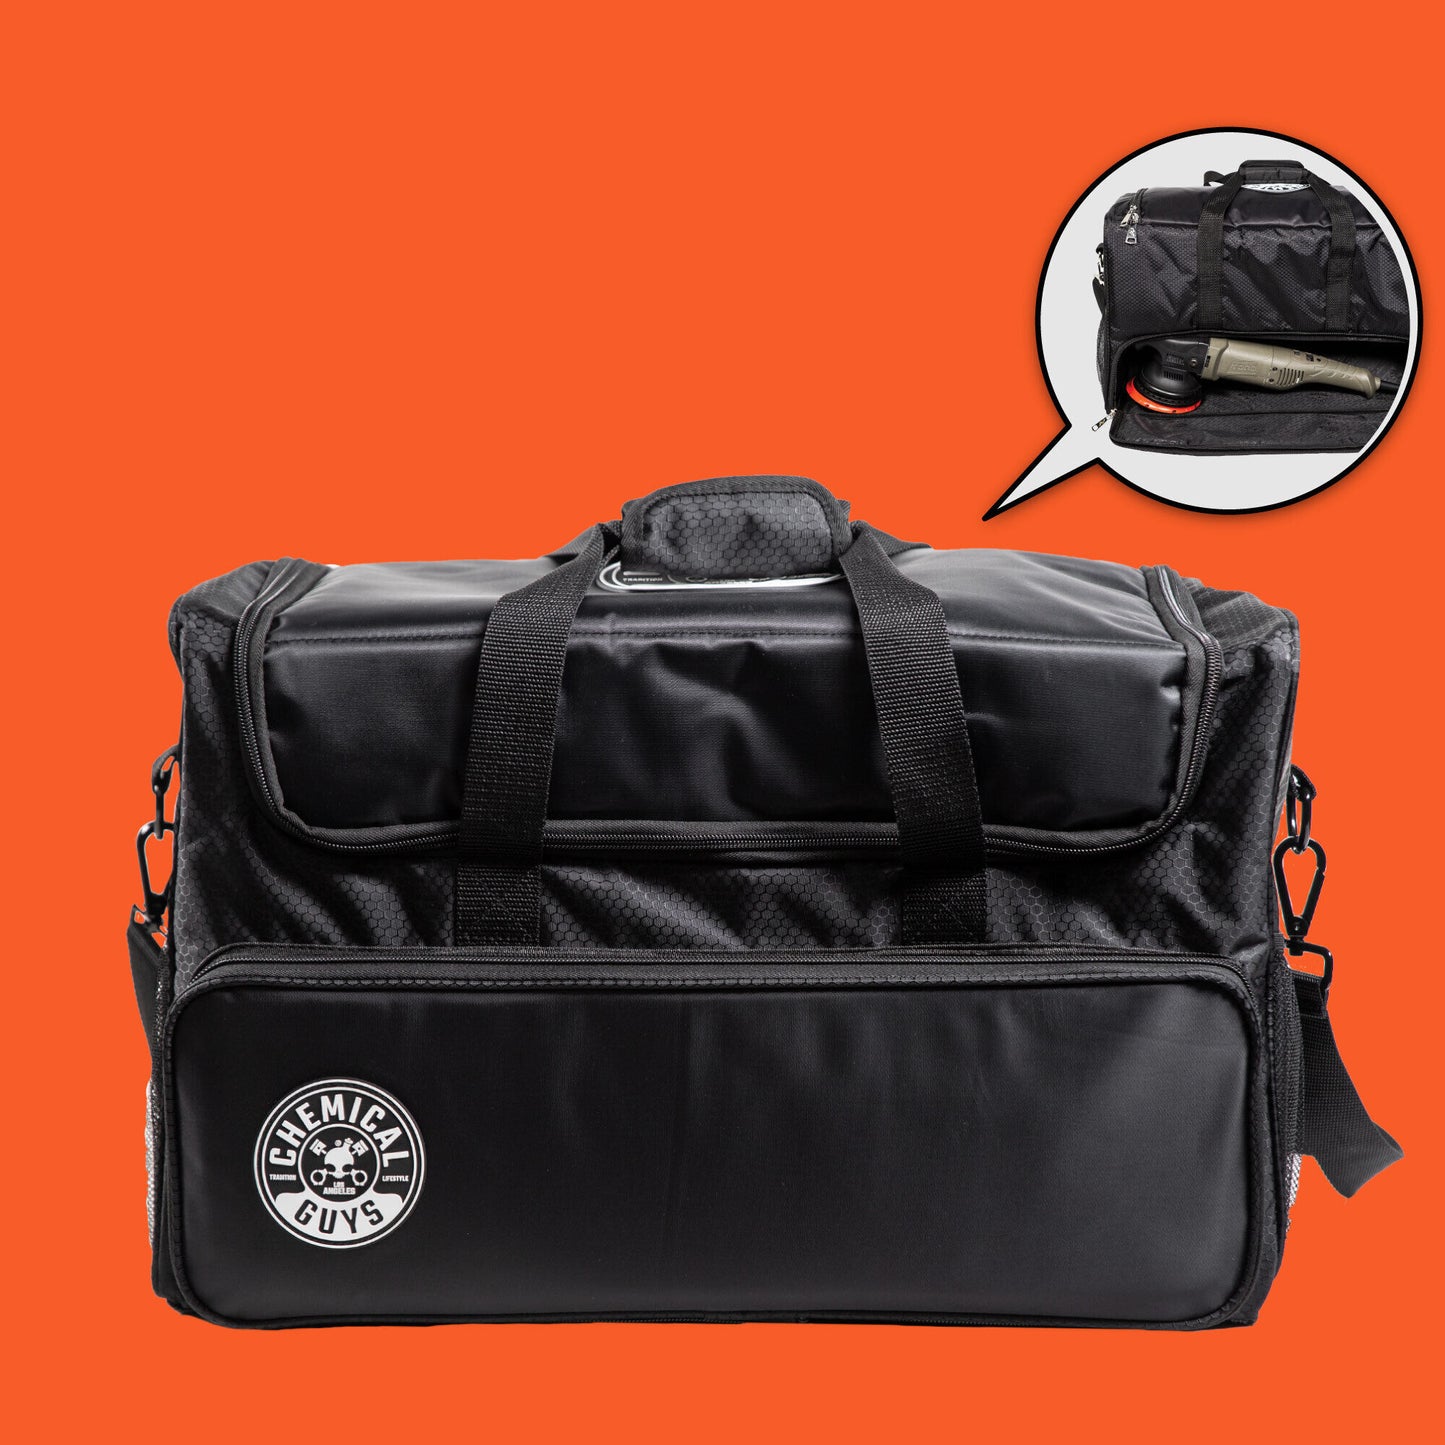 TORQX Complete Detailing Kit with Arsenal Range Polisher Bag (14 Items)